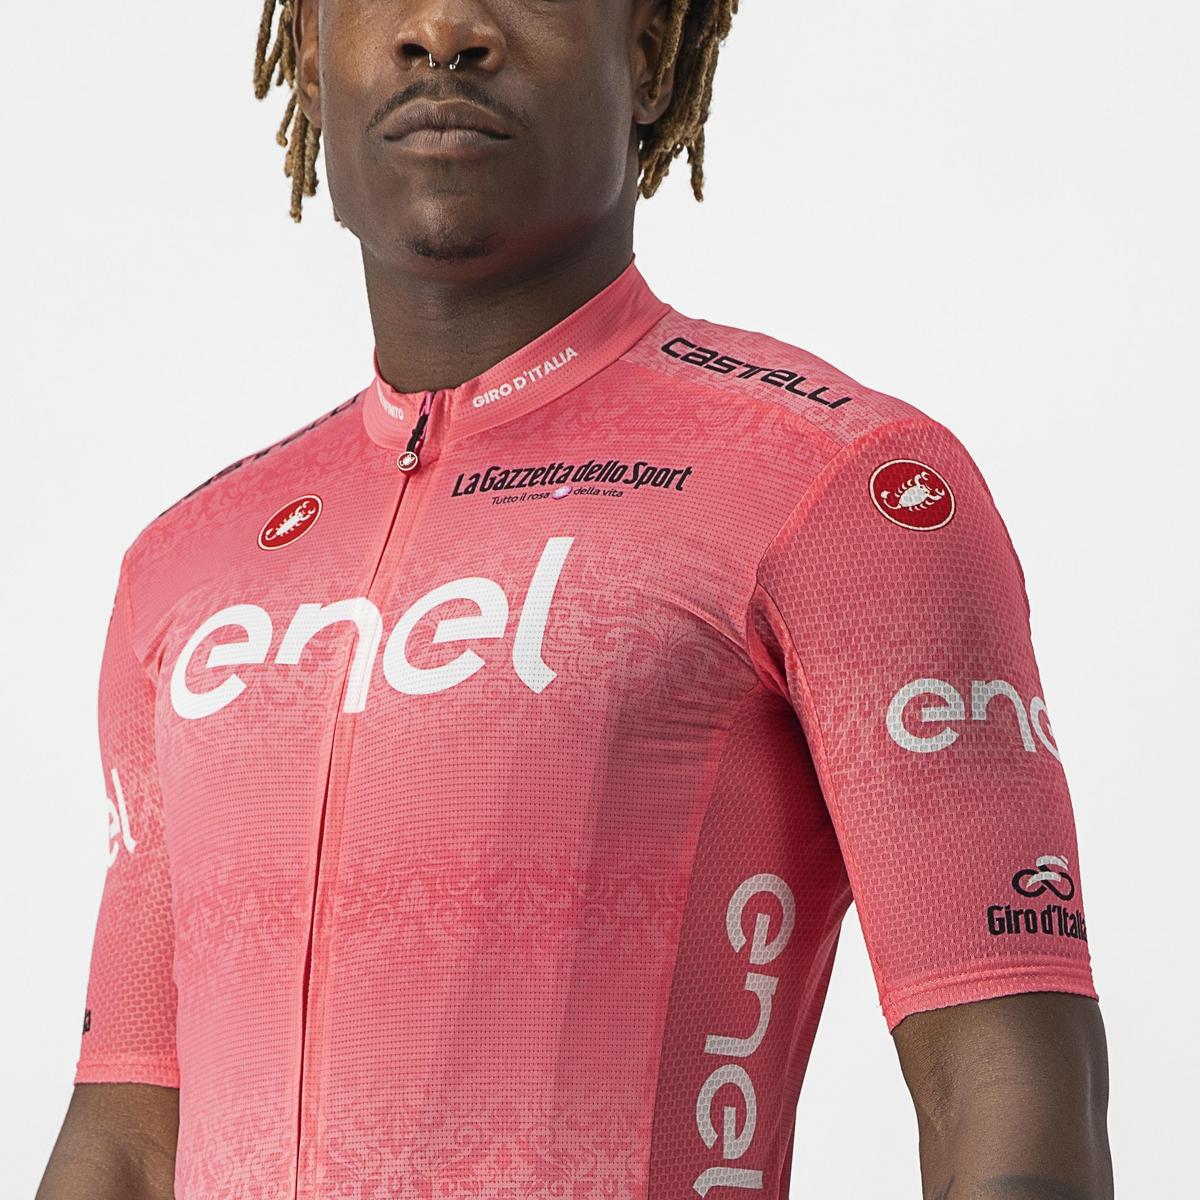 #Giro105 Competizione Cykeltrøje